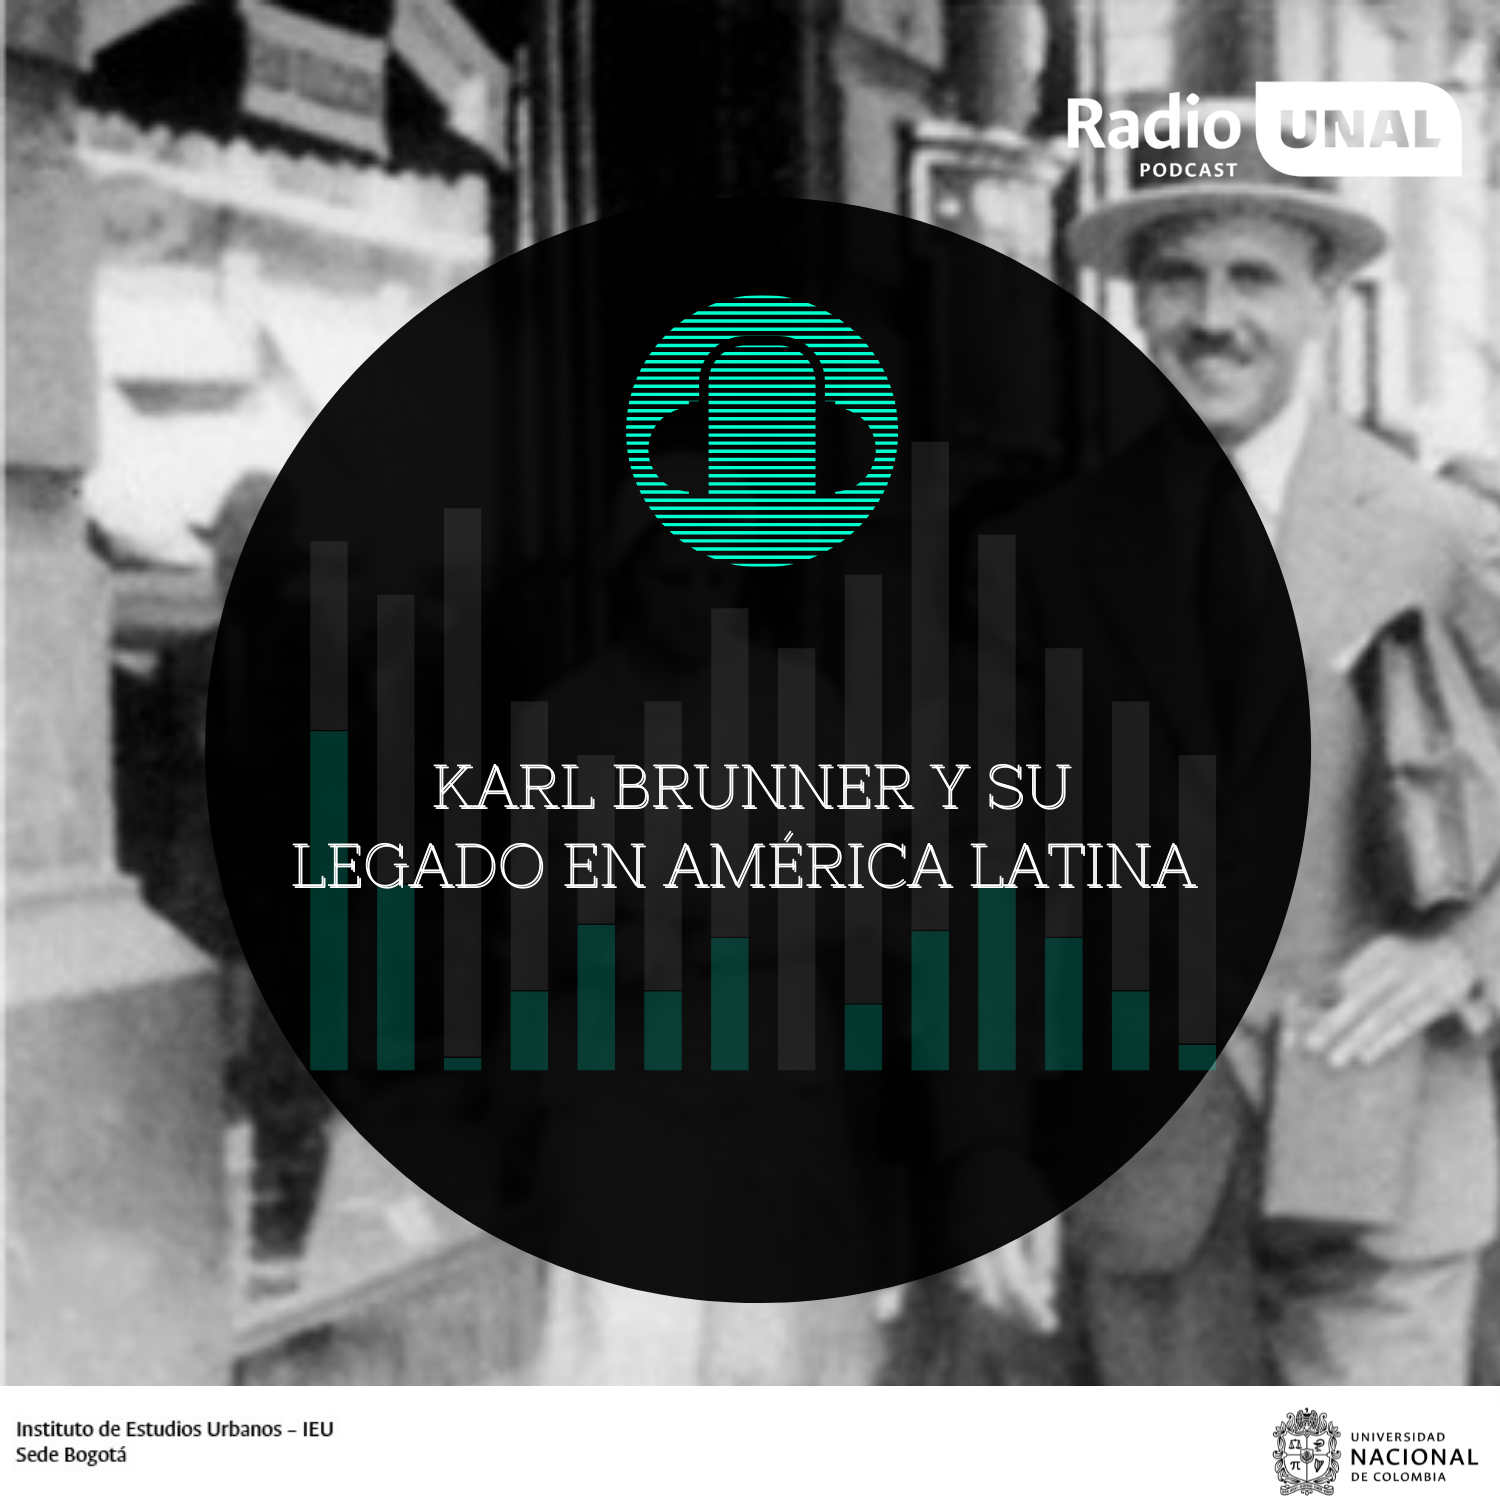 #PodcastRadioUnal Karl Brunner y su legado en América Latina